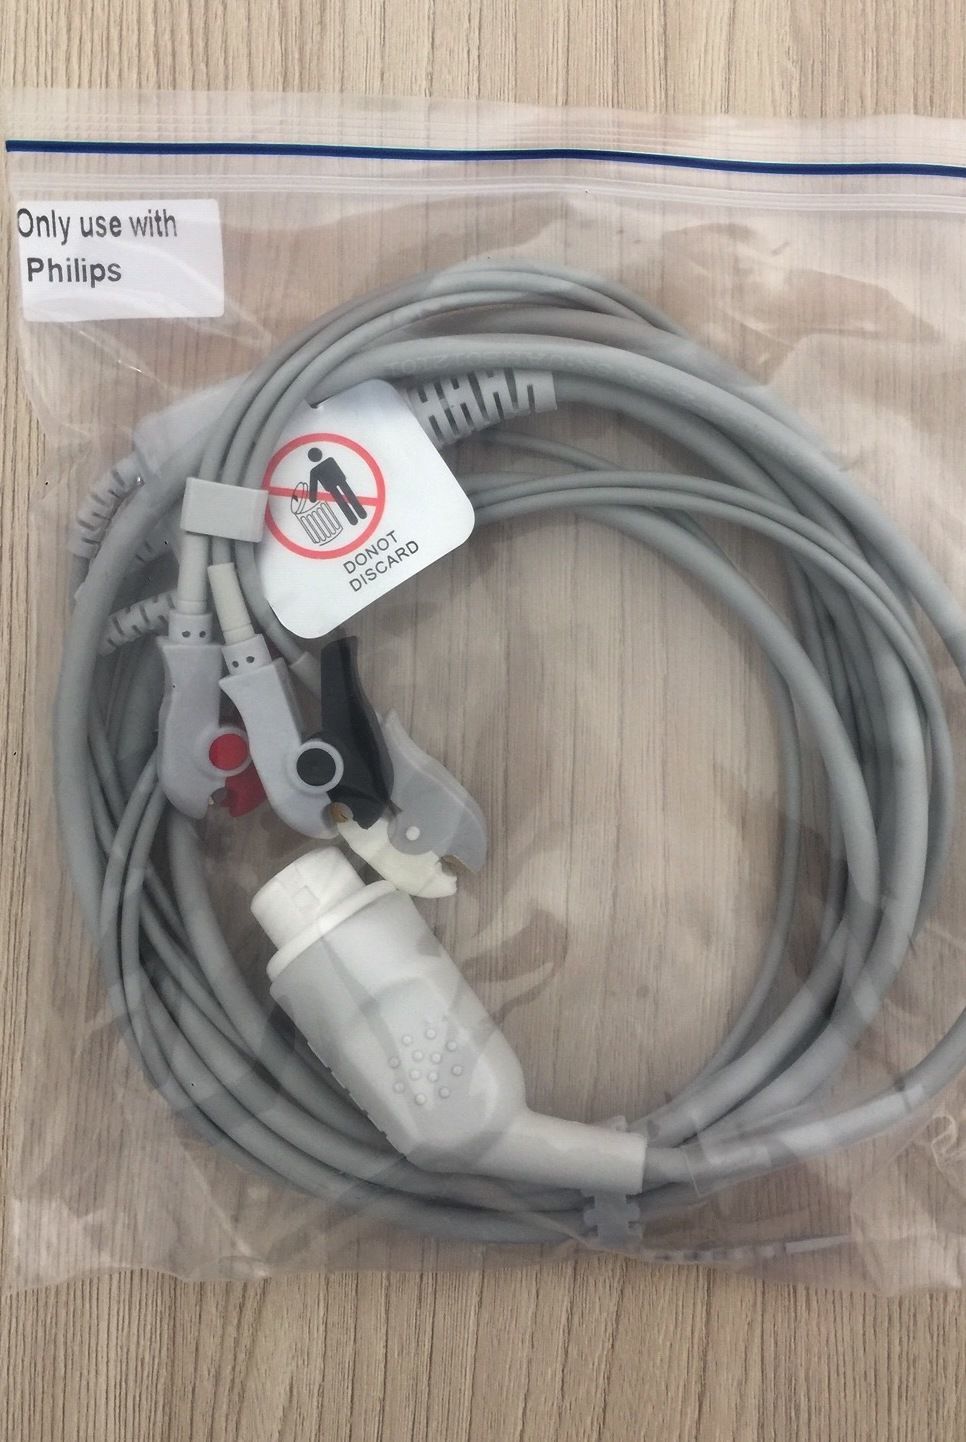 ECG 3 lead wires cable clip for Philips MP20 MP Series_สายอีซีจีเคเบิ้ลสำหรับเครื่องมอนิเตอร์ผู้ป่วยฟิลิปส์ Philips